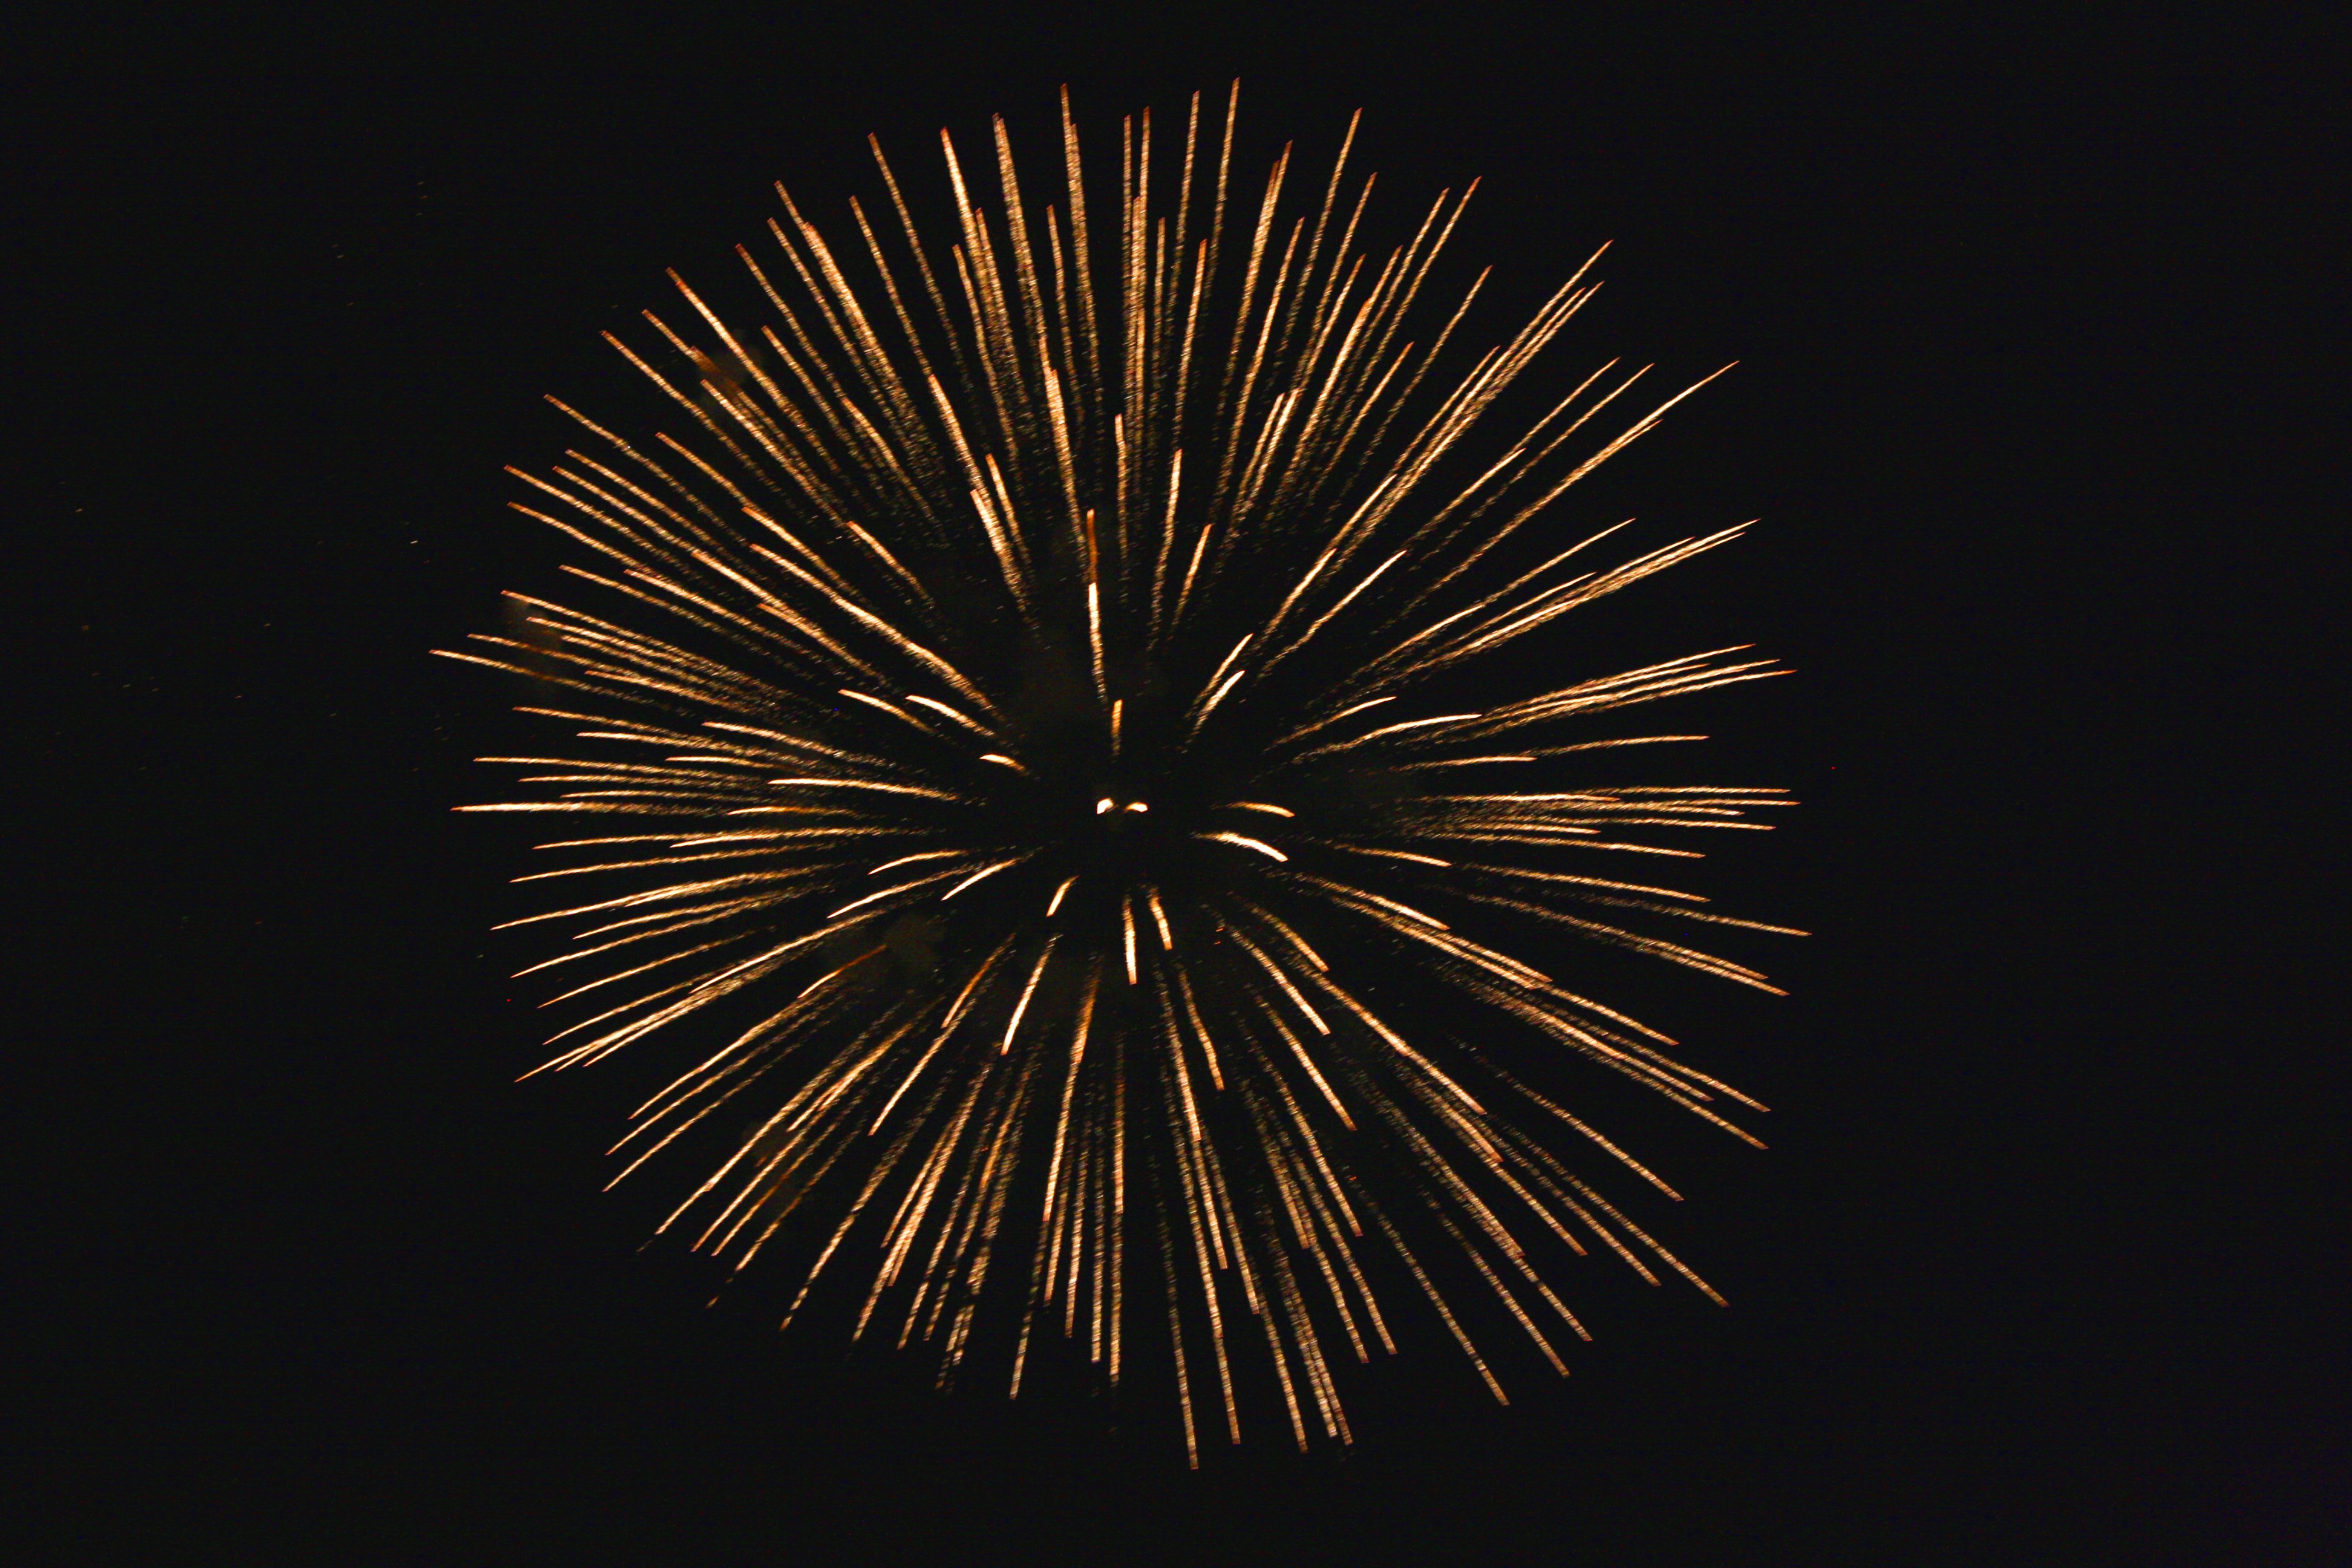 Golden Starburst Fireworks Picture | Free Photograph | Photos Public ...